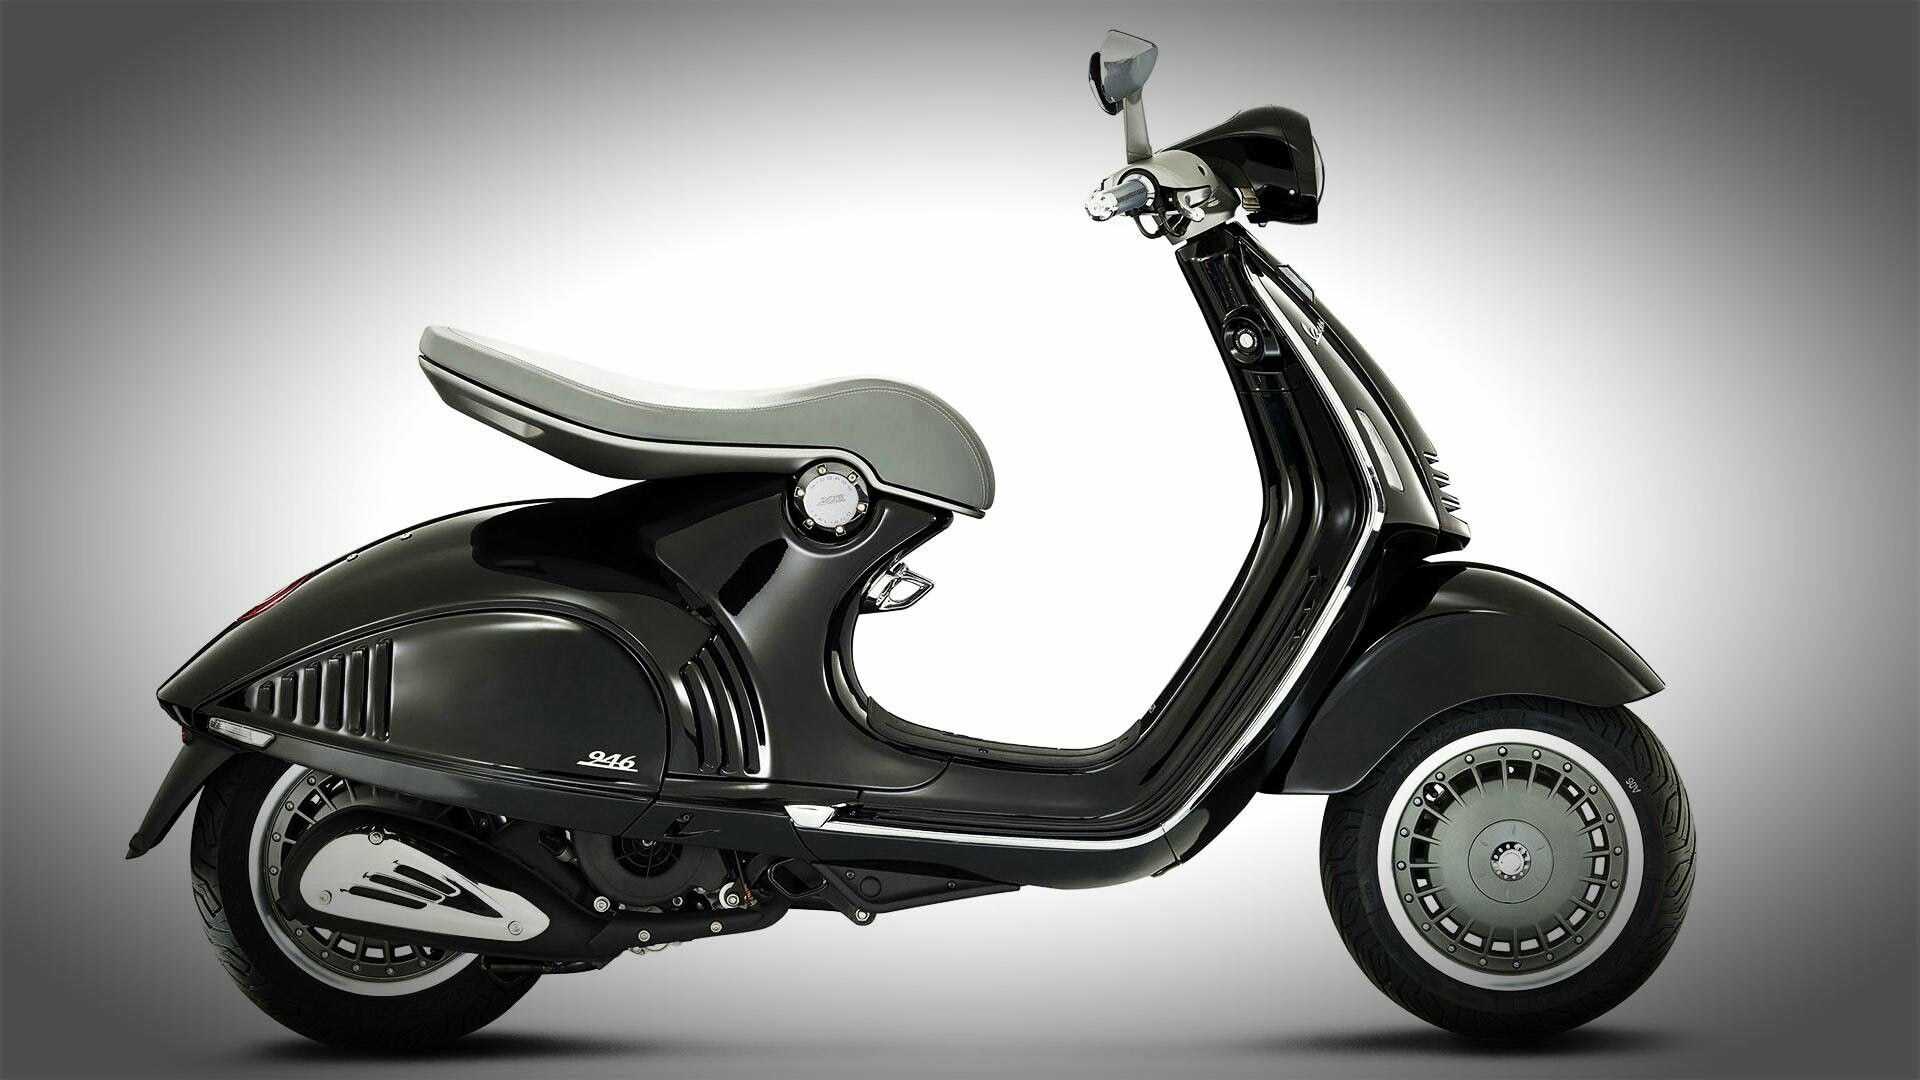 2007 vespa gts 250ie обзор - motorcycle.ru - производитель 2022